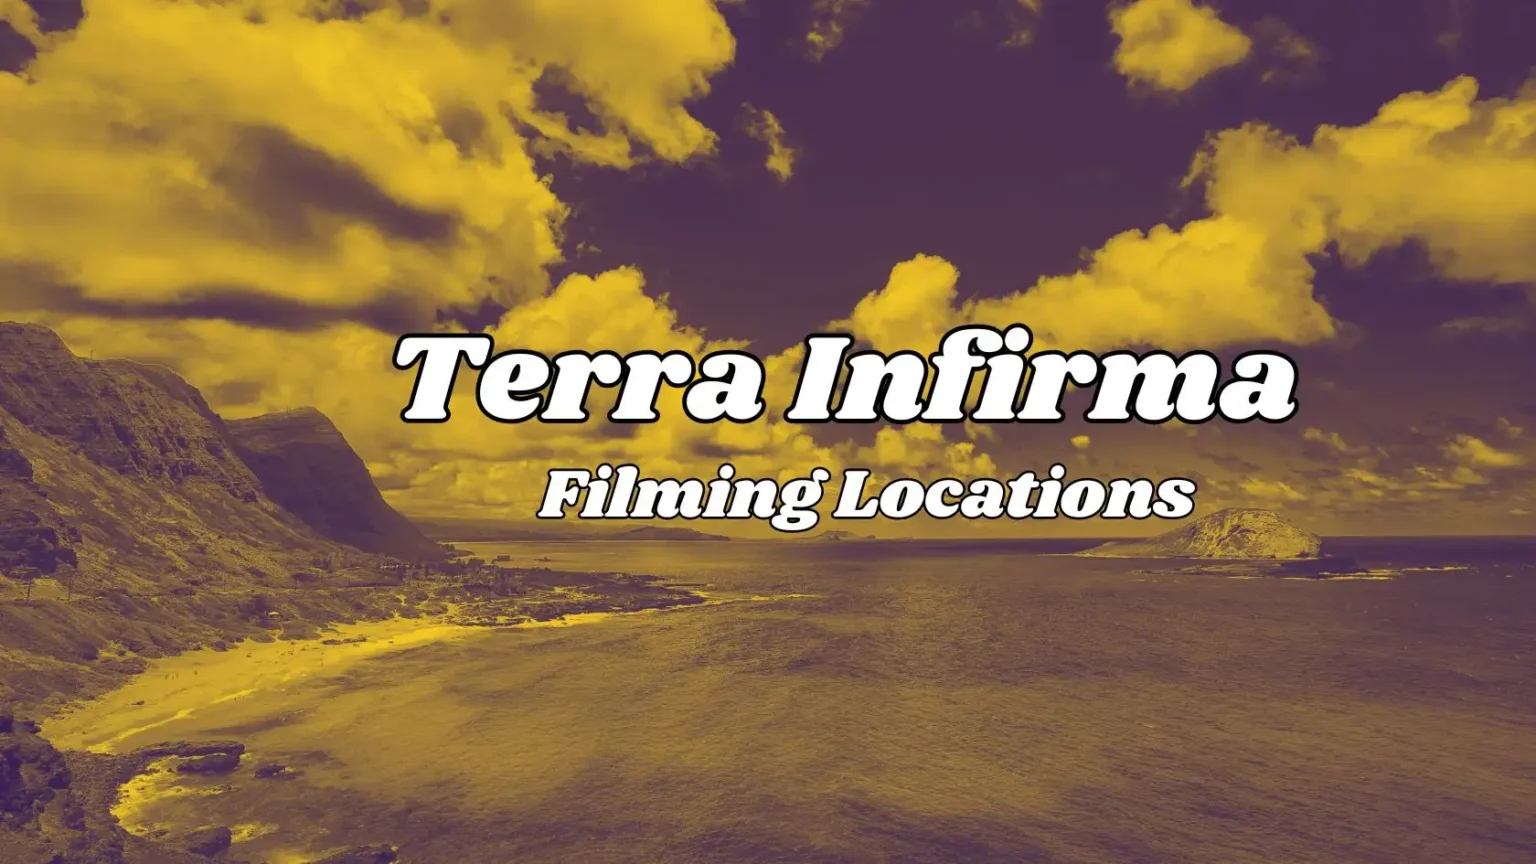 Terra Infirma Filming Locations